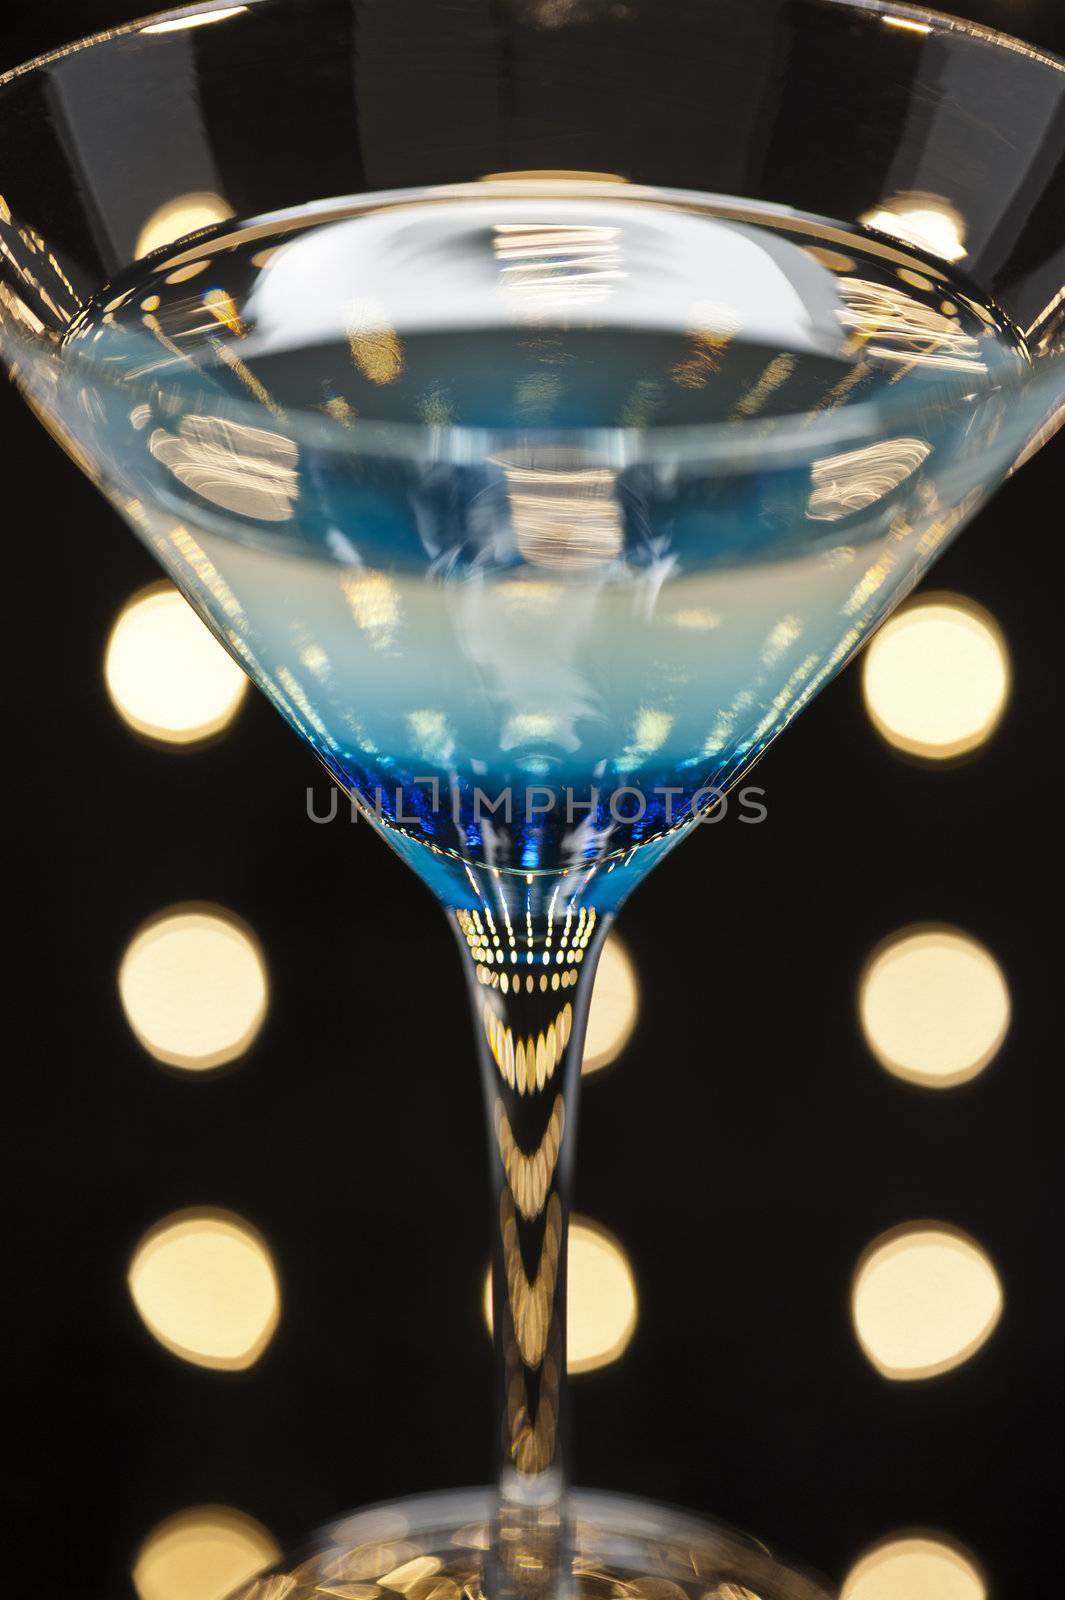 Martinis on the dance floor with nice illumination